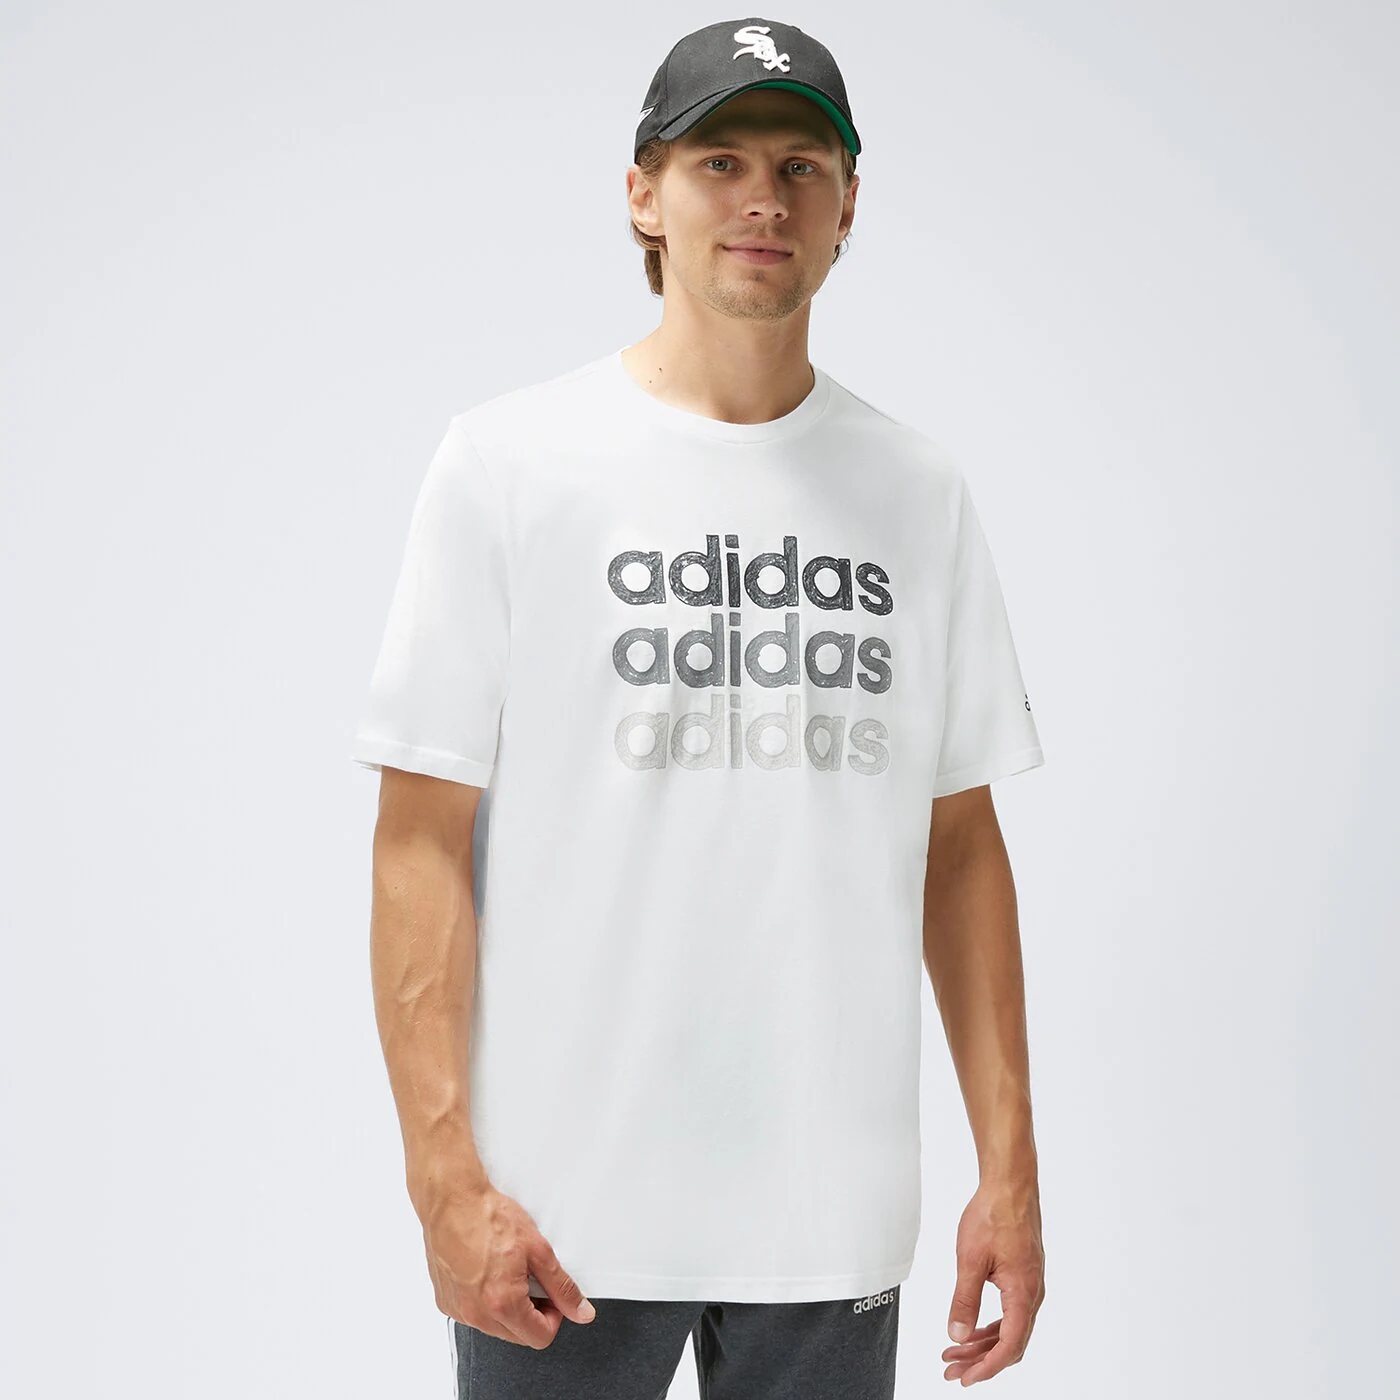 Футболка Adidas M MULT, белый футболка муж he4820 adidas m mult g t shared размер xl